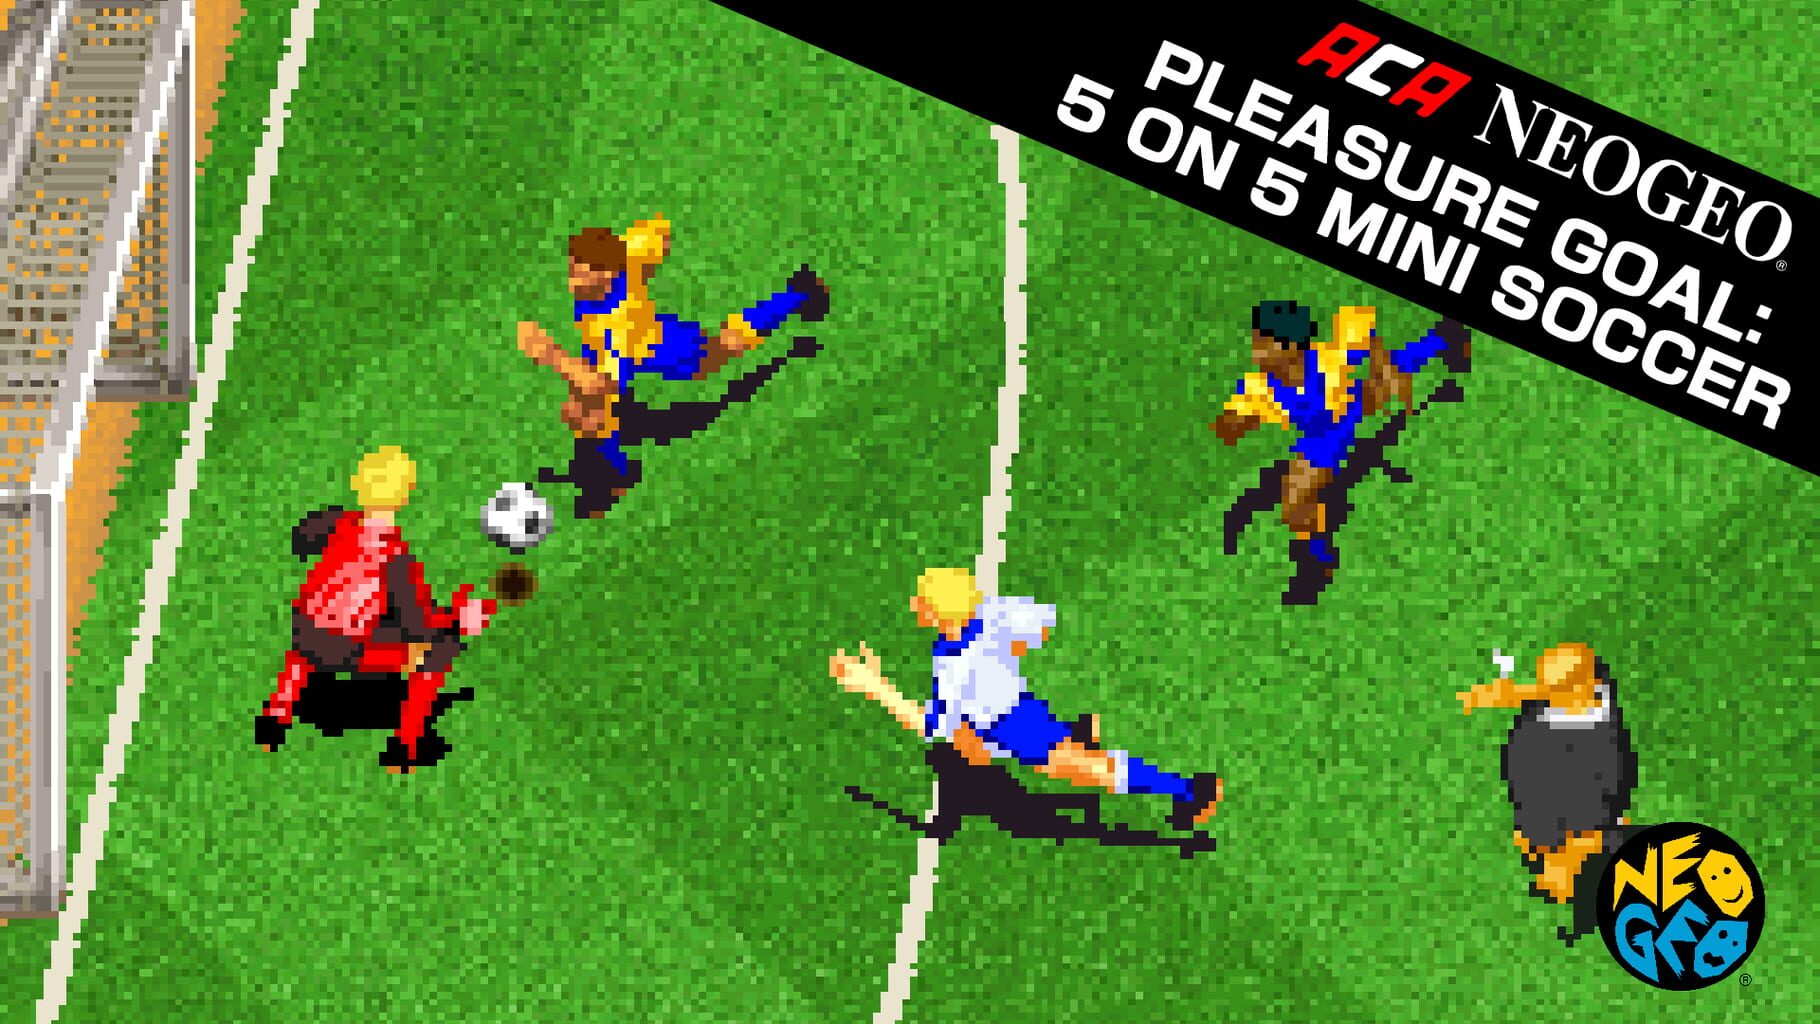 ACA Neo Geo: Pleasure Goal - 5 on 5 Mini Soccer artwork